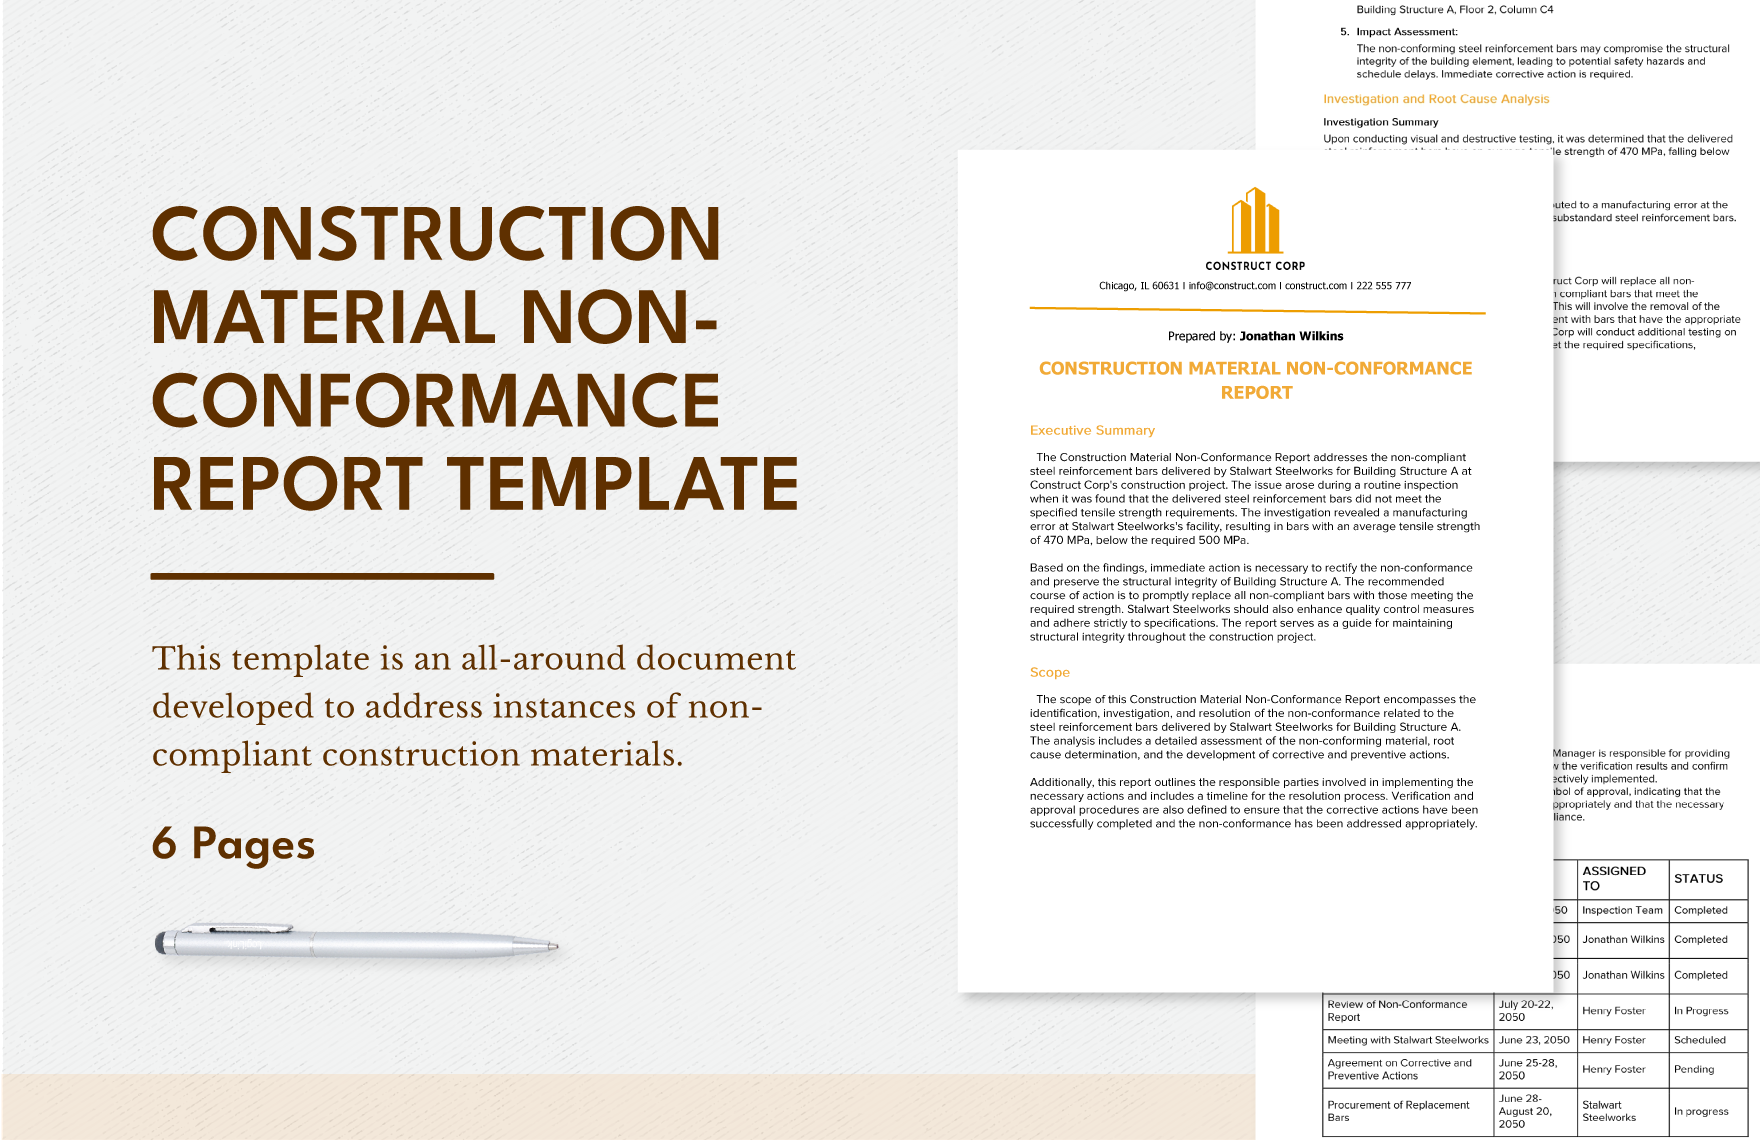 Construction Material Non-Conformance Report Template